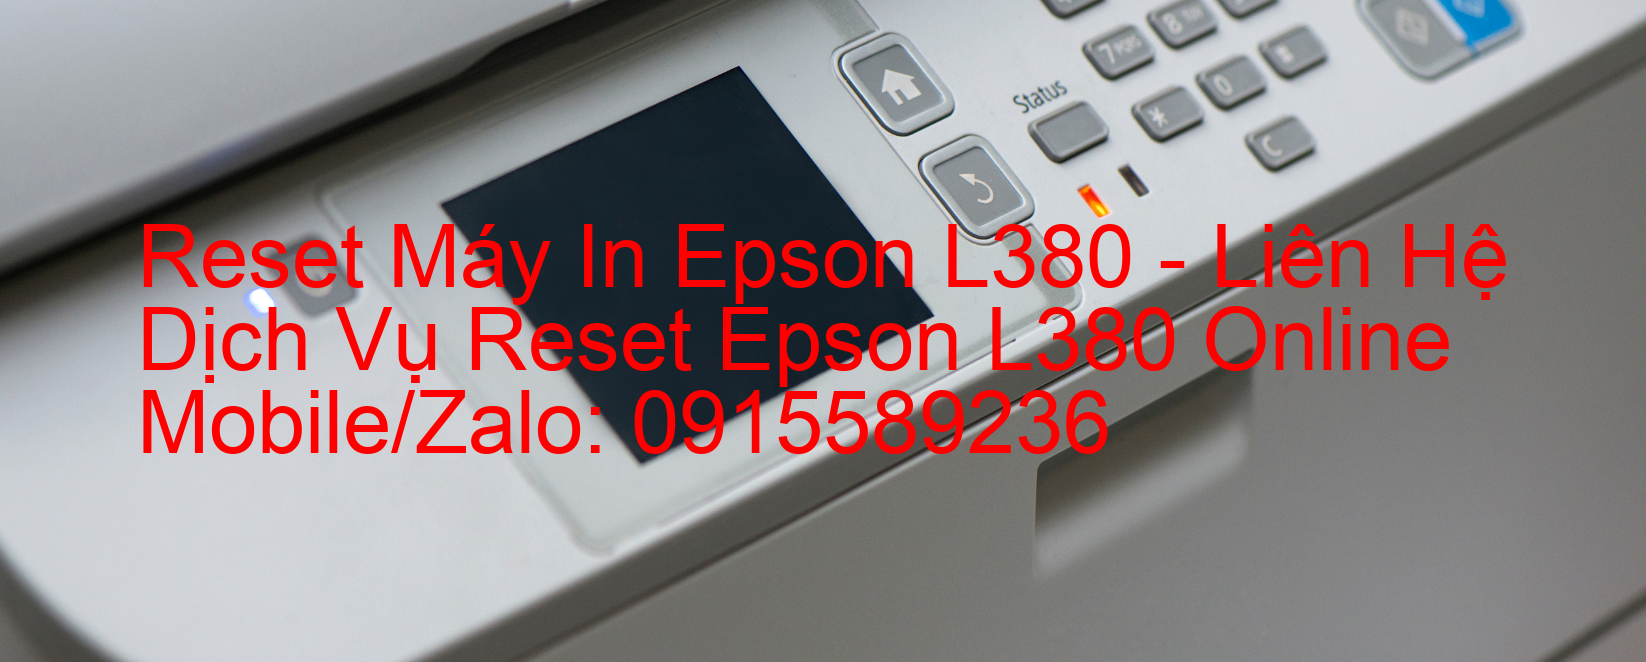 Reset Máy In Epson L380 Online